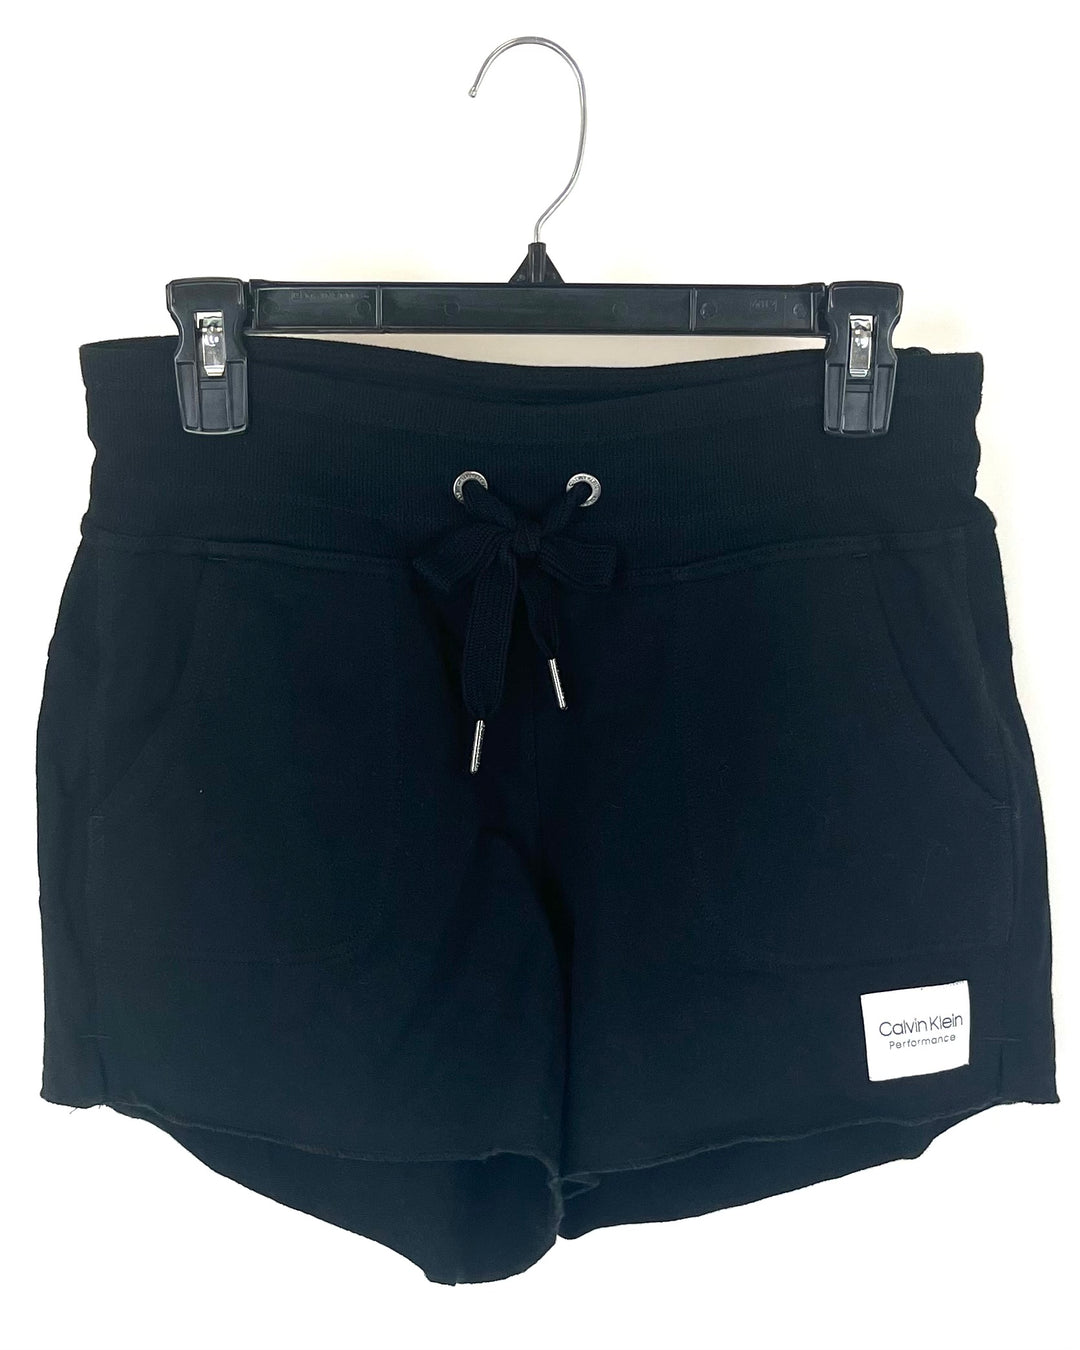 Black Drawstring Shorts - Size 4/6